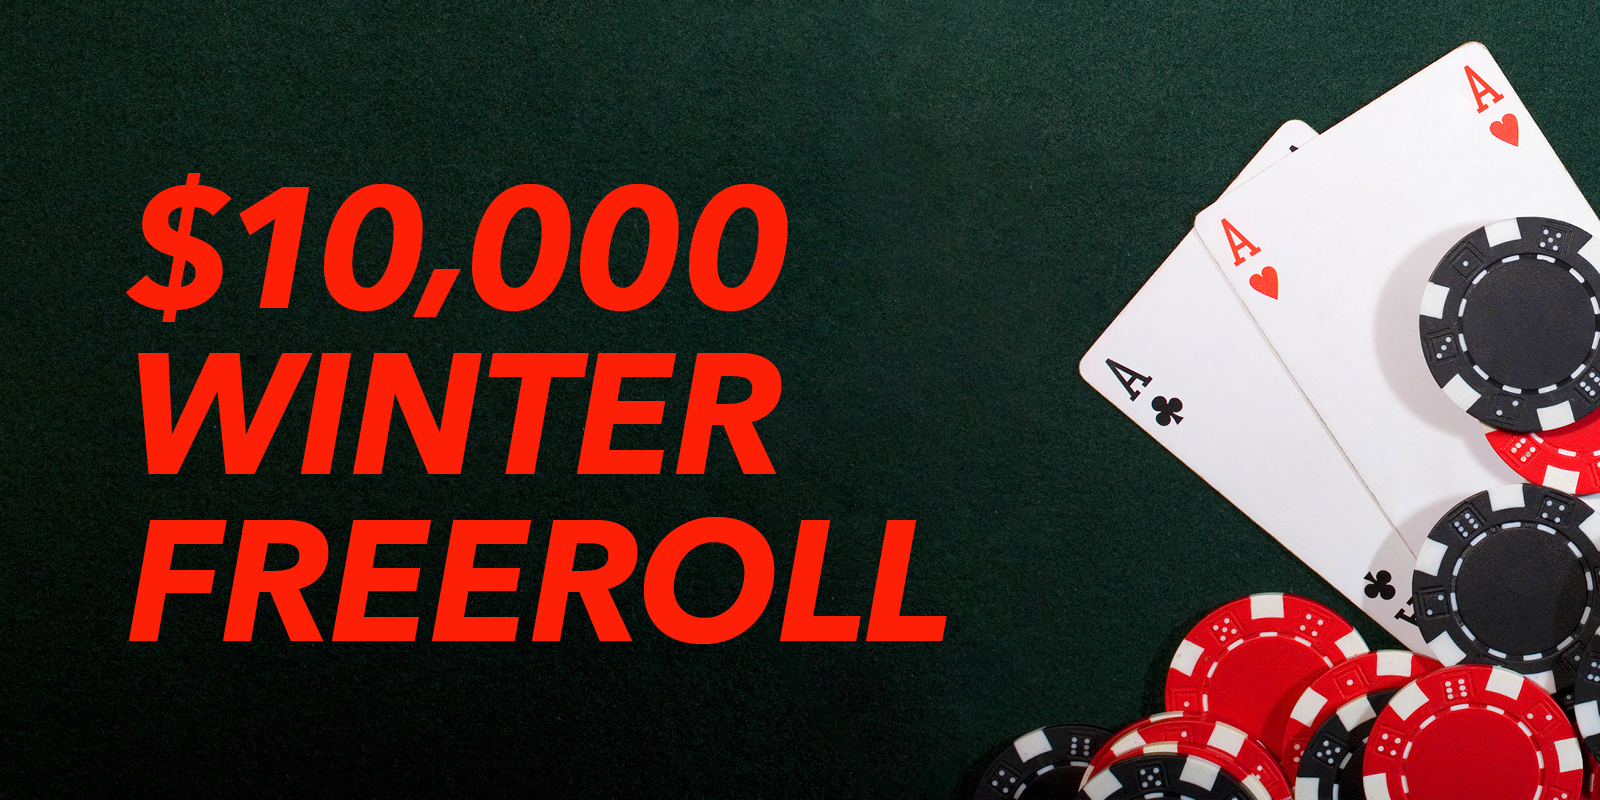 $10,000 Winter Freeroll aign